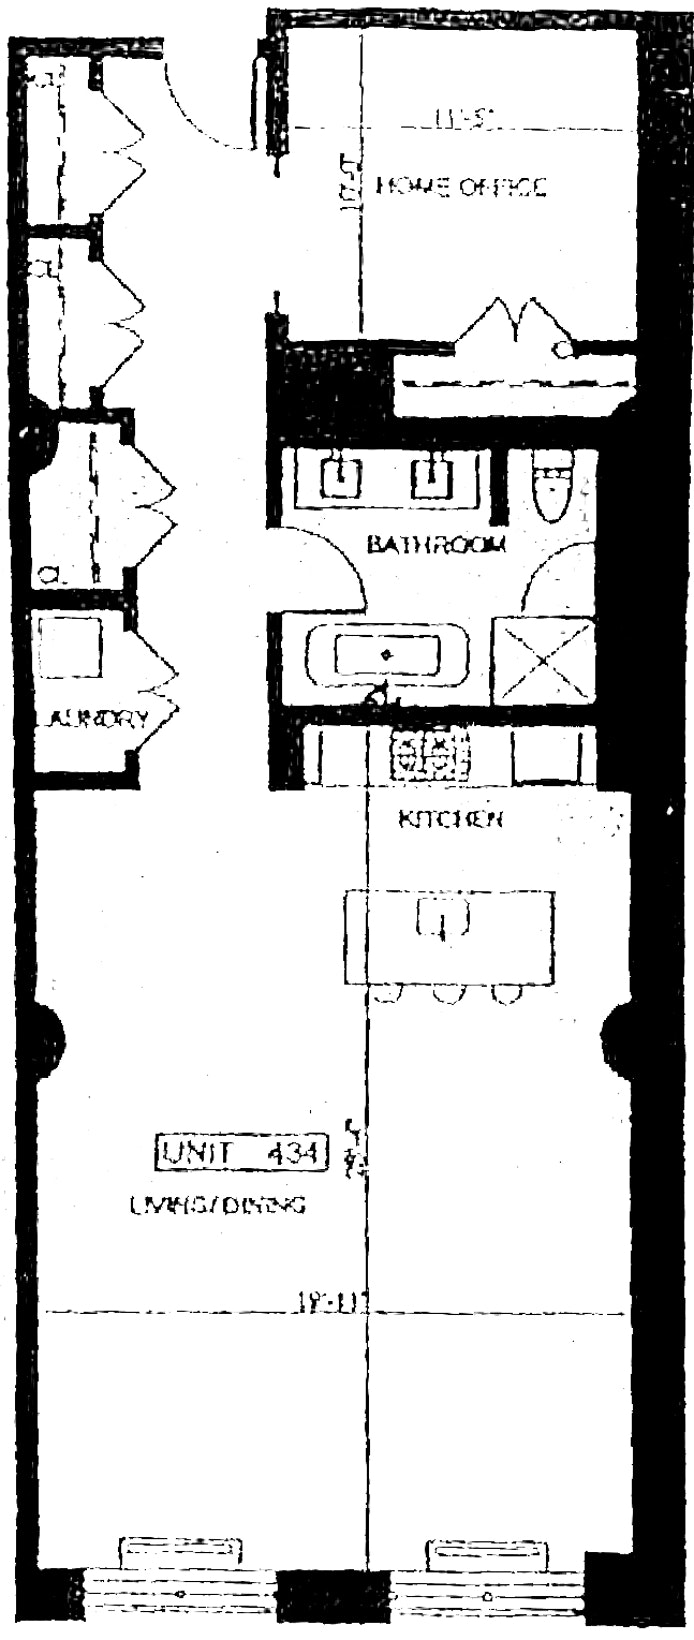 Floorplan for 360 Furman Street, 434